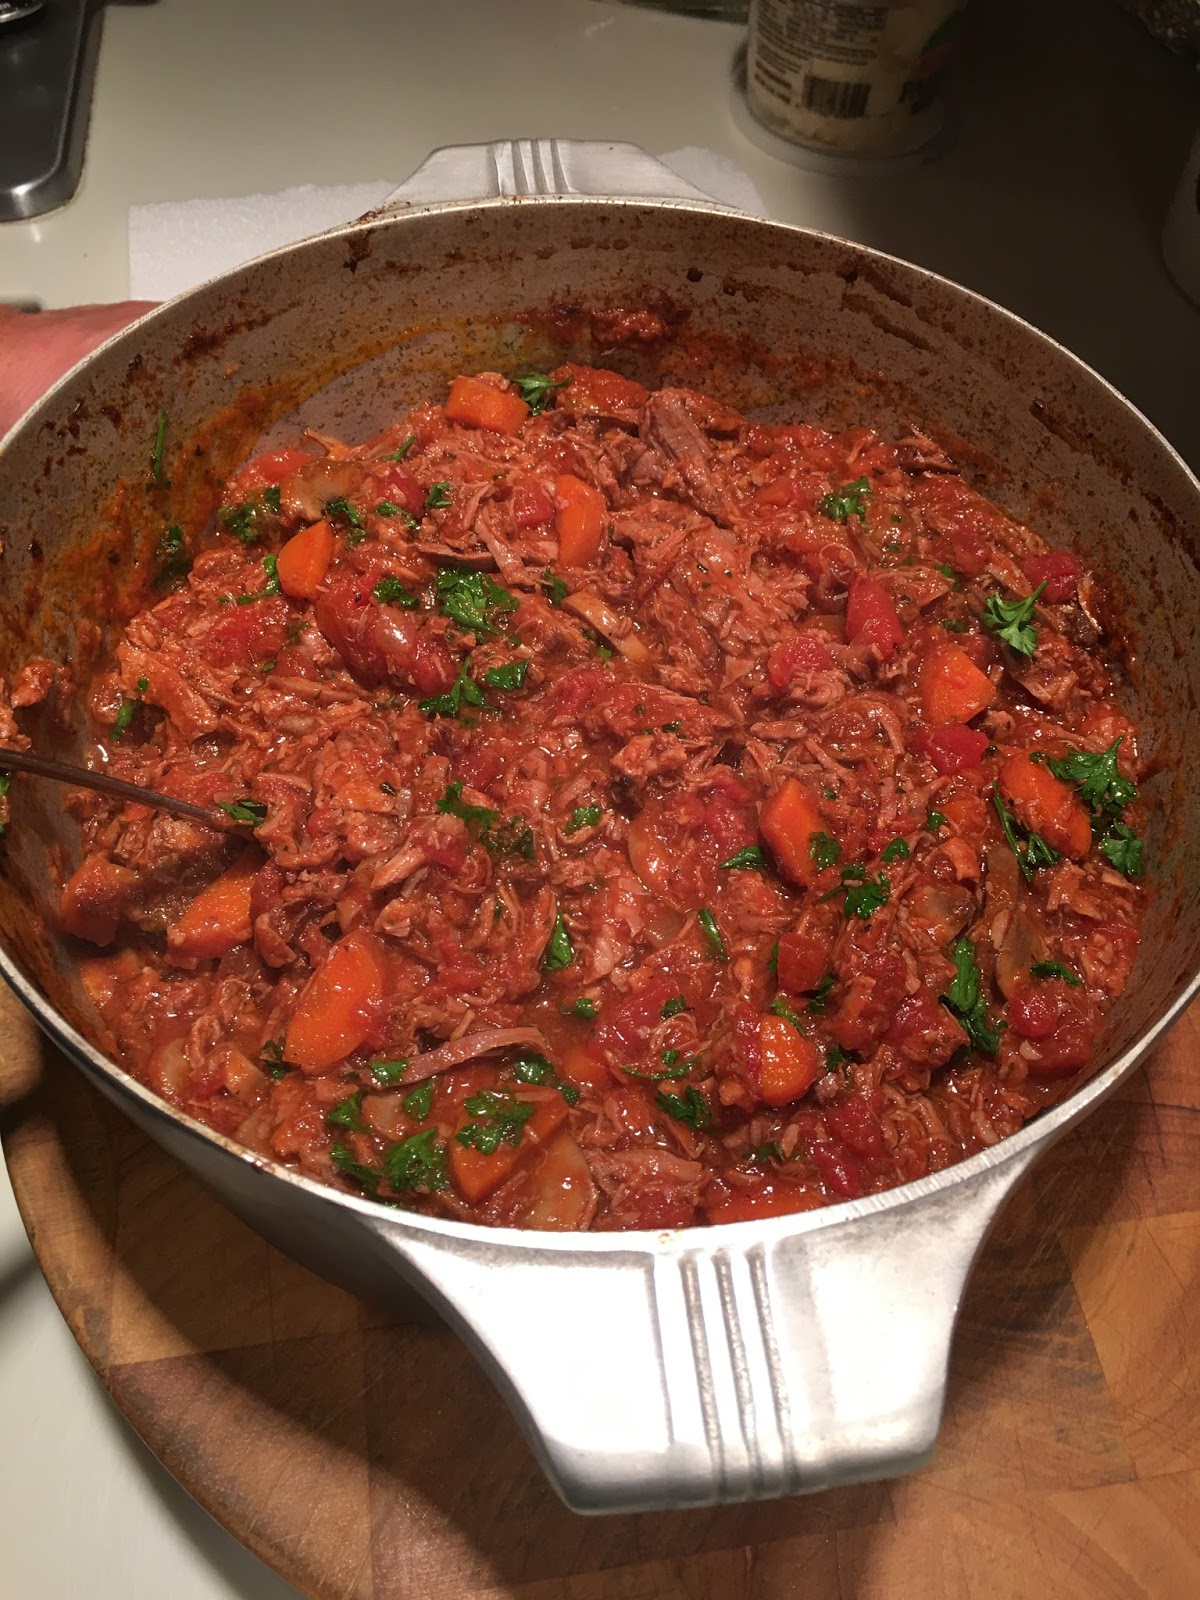 The Swedish Chef: Braised Italian Beef Ragù